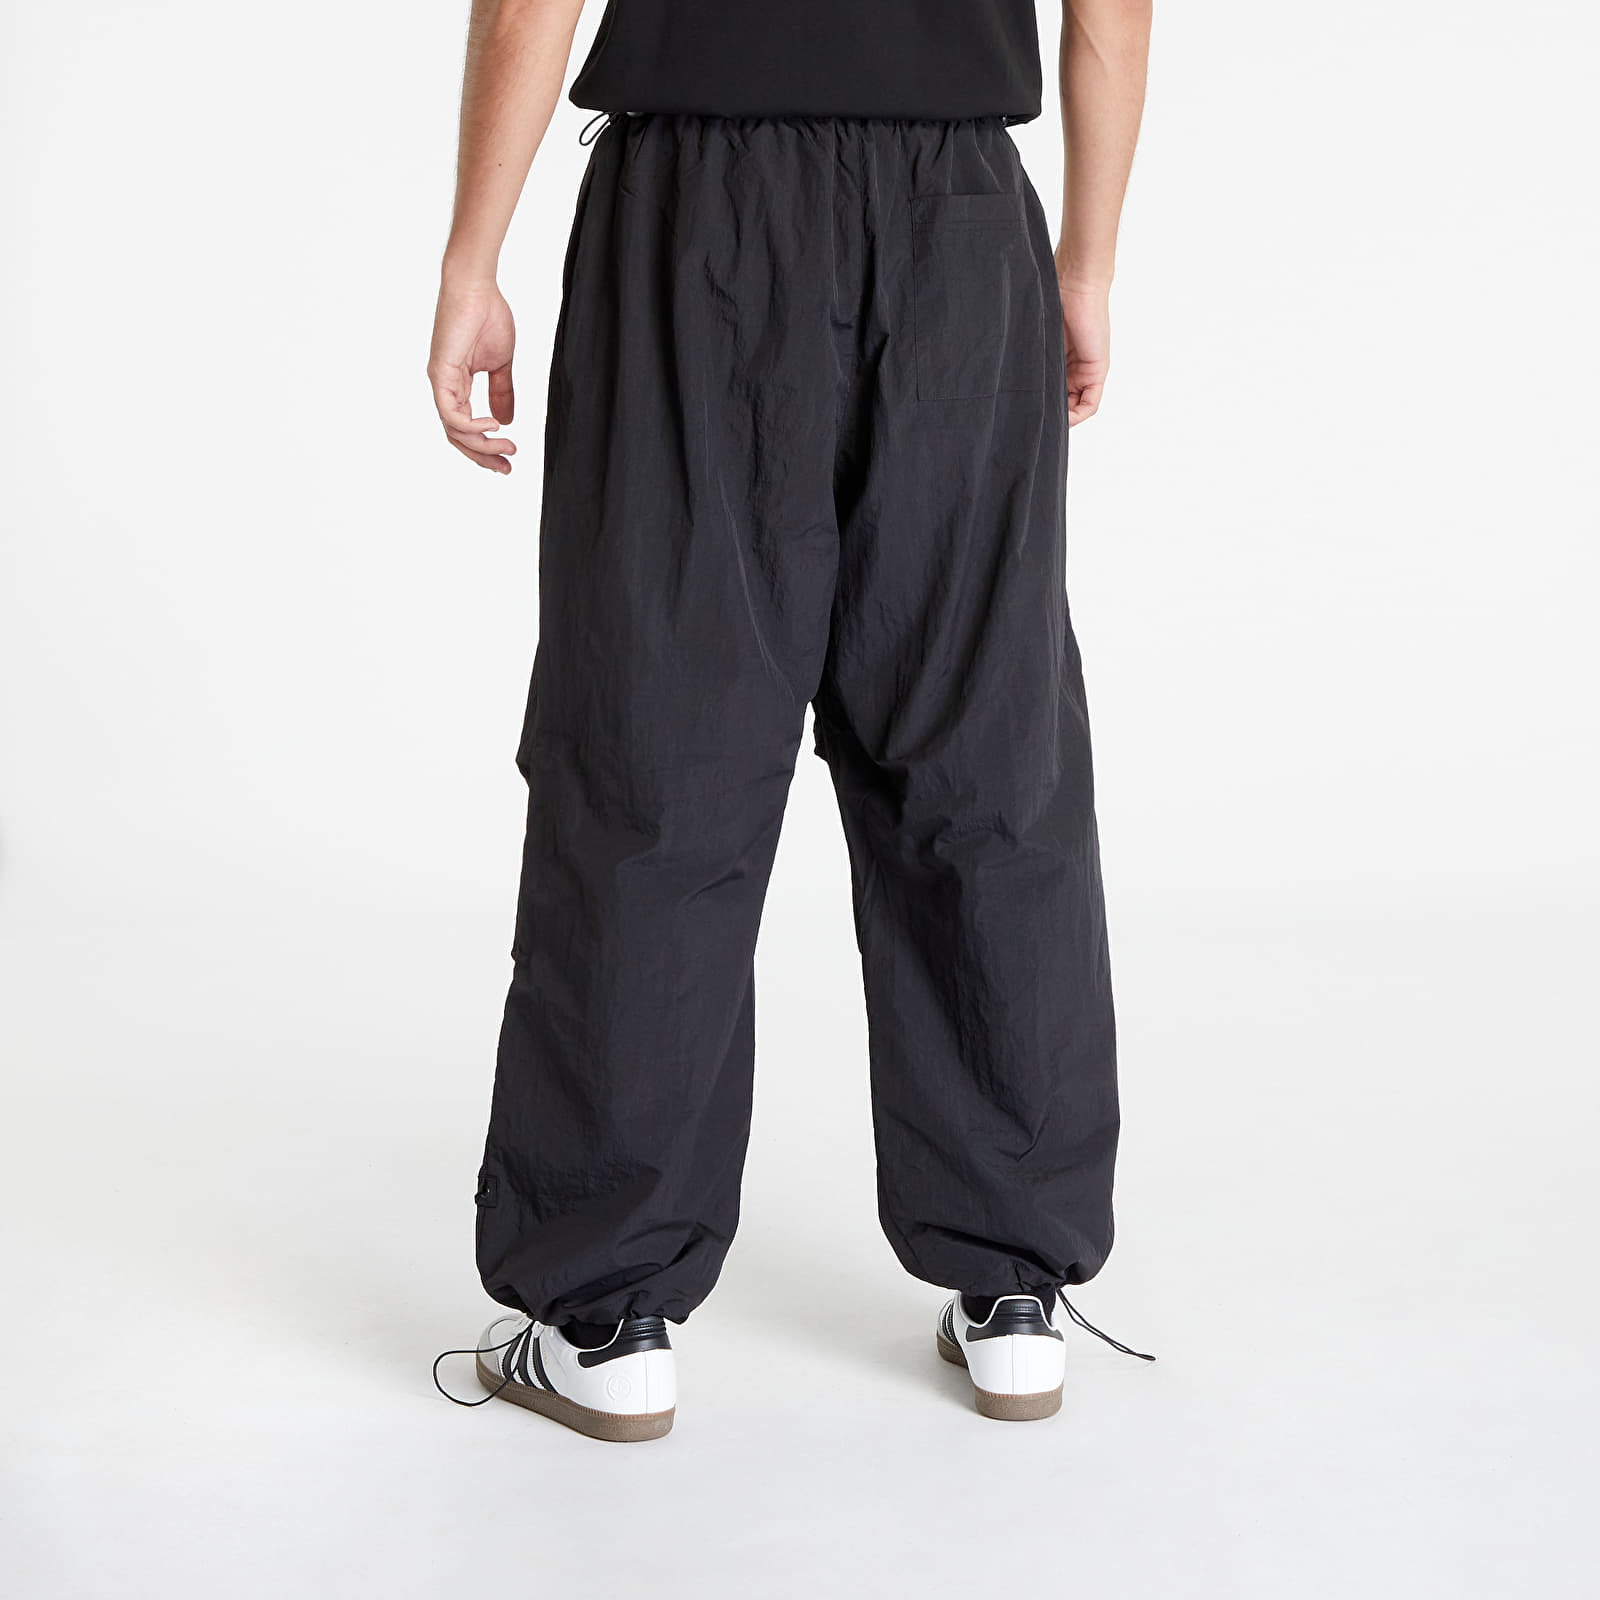 Queens Pants Urban and Classics Nylon Black Pants Parachute jeans |